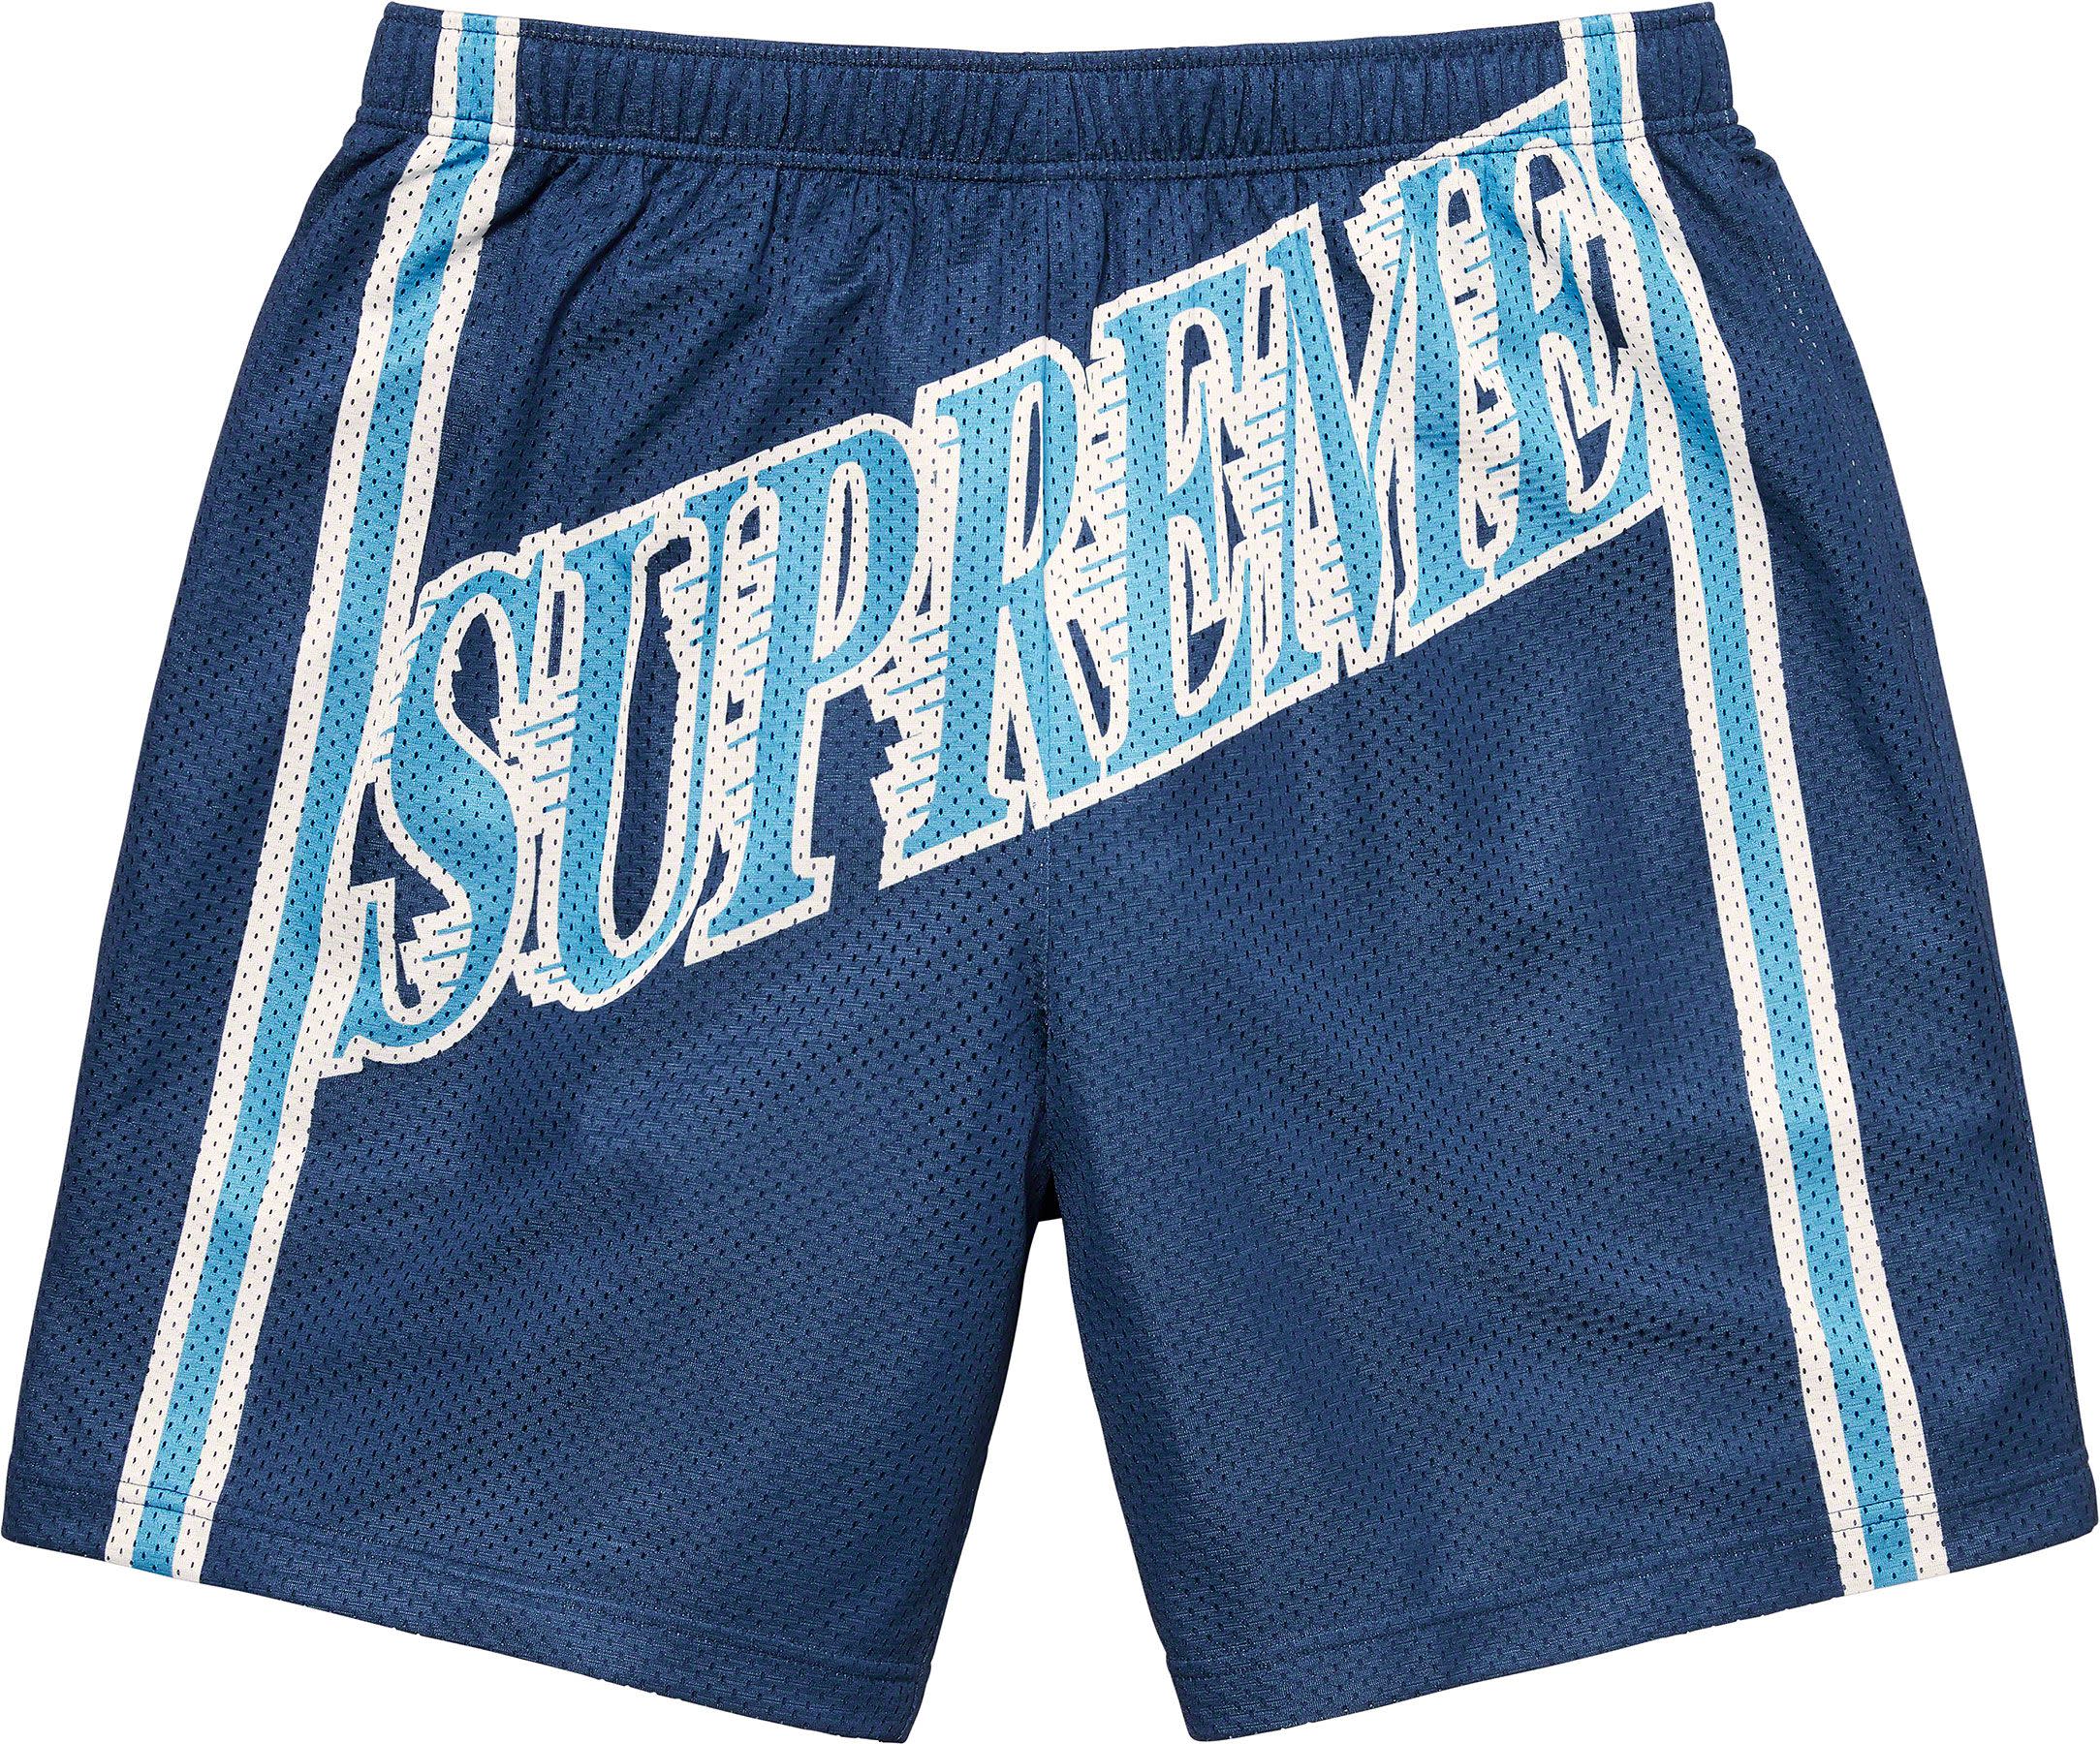 Supreme, Shorts